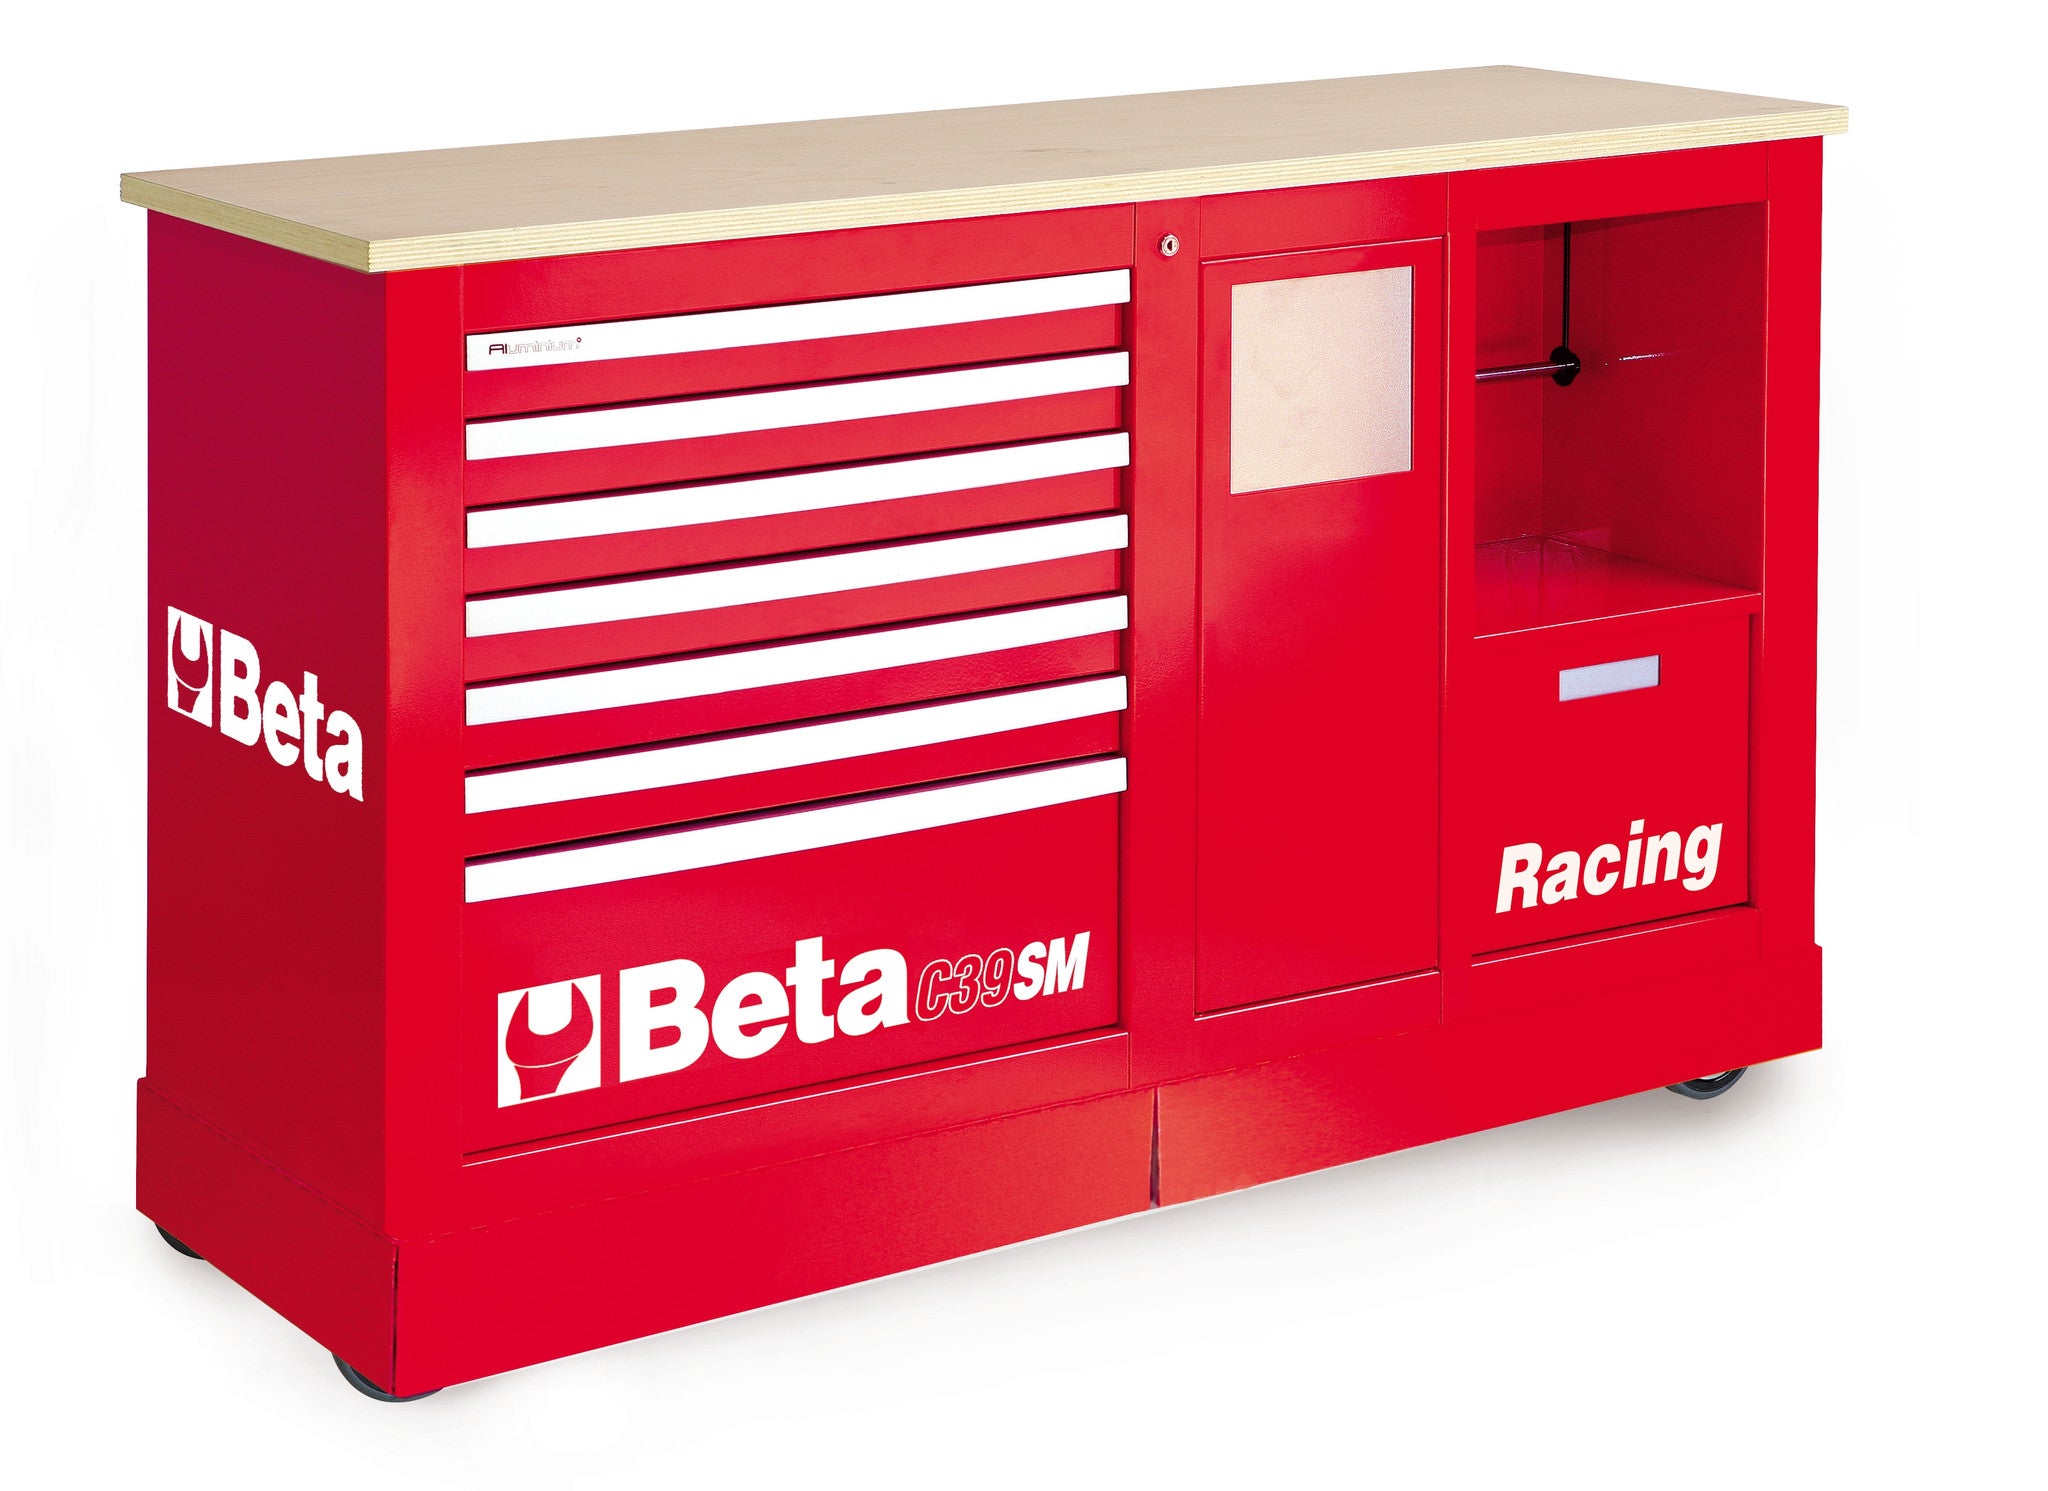 Carrello Beta C39 SM Racing